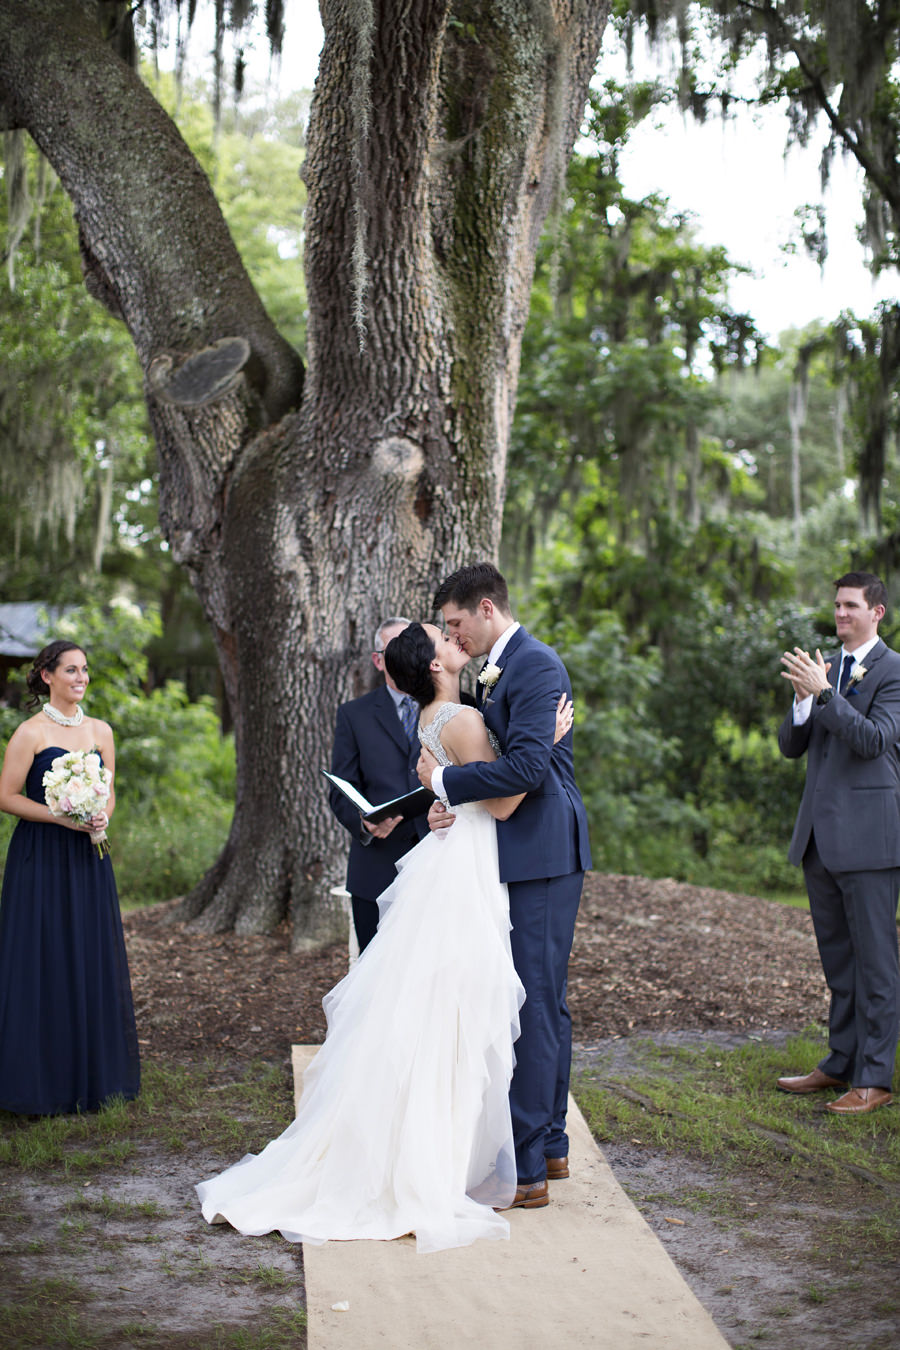 Outdoor Wedding Ceremony Bride and Groom First Kiss | Tampa Bay Wedding Venue Cross Creek Ranch | Wedding Photographer Djamel Photography